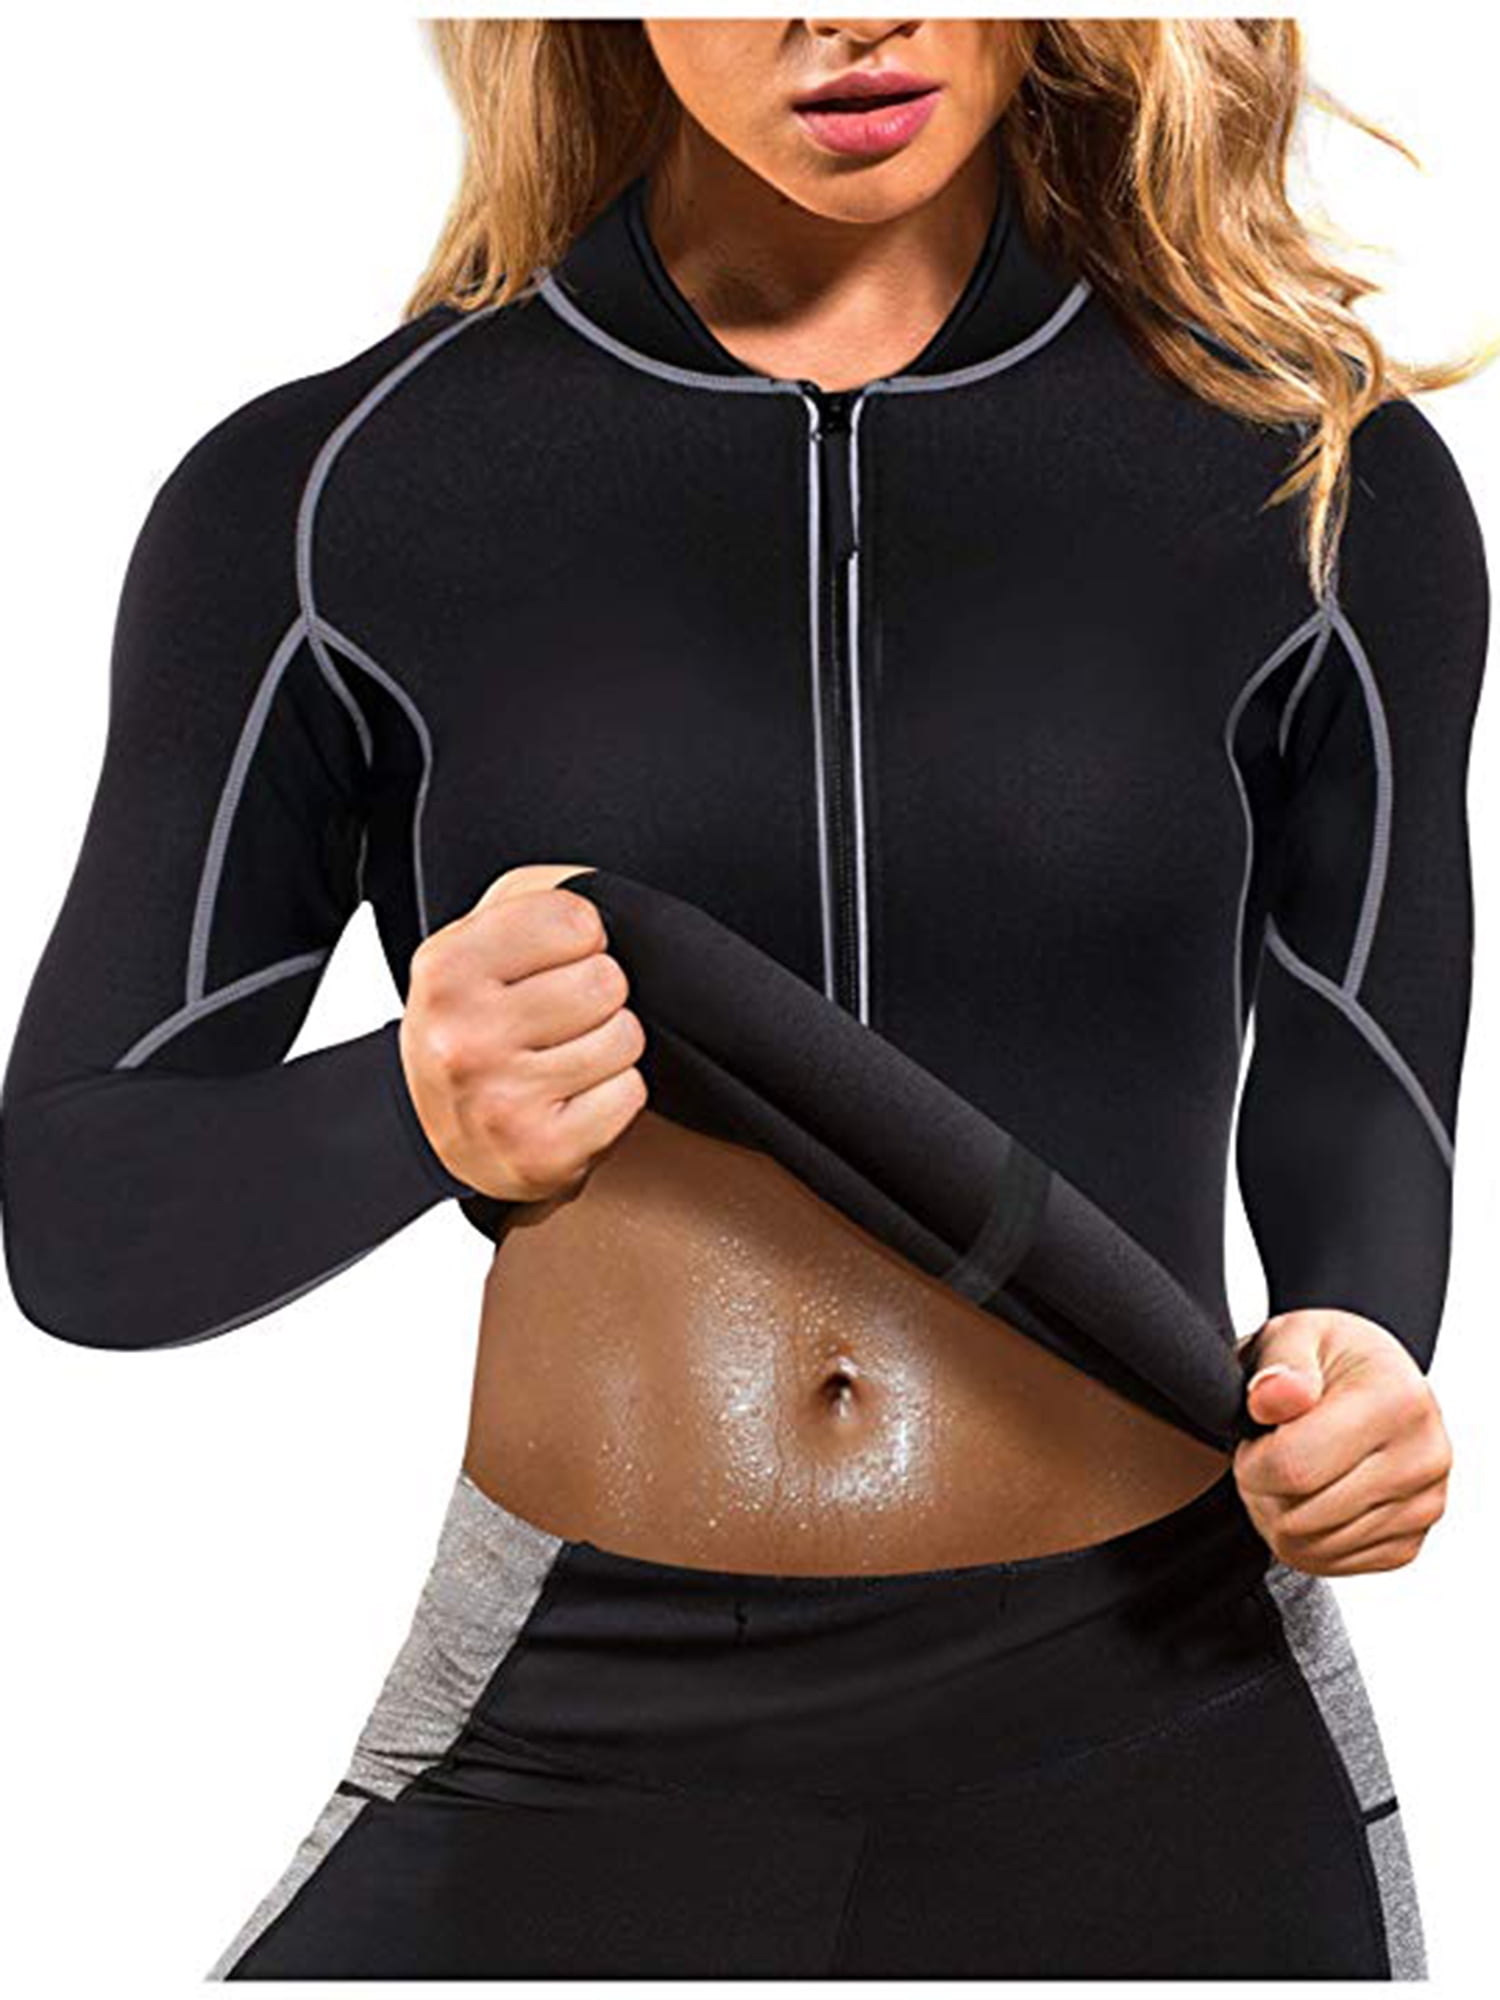 NINGMI Sauna Suit for Women Sweat Zipper Neoprene Shirt Waist Trainer Womens Slimming Jacket Workout Body Short Sleeve Gym 